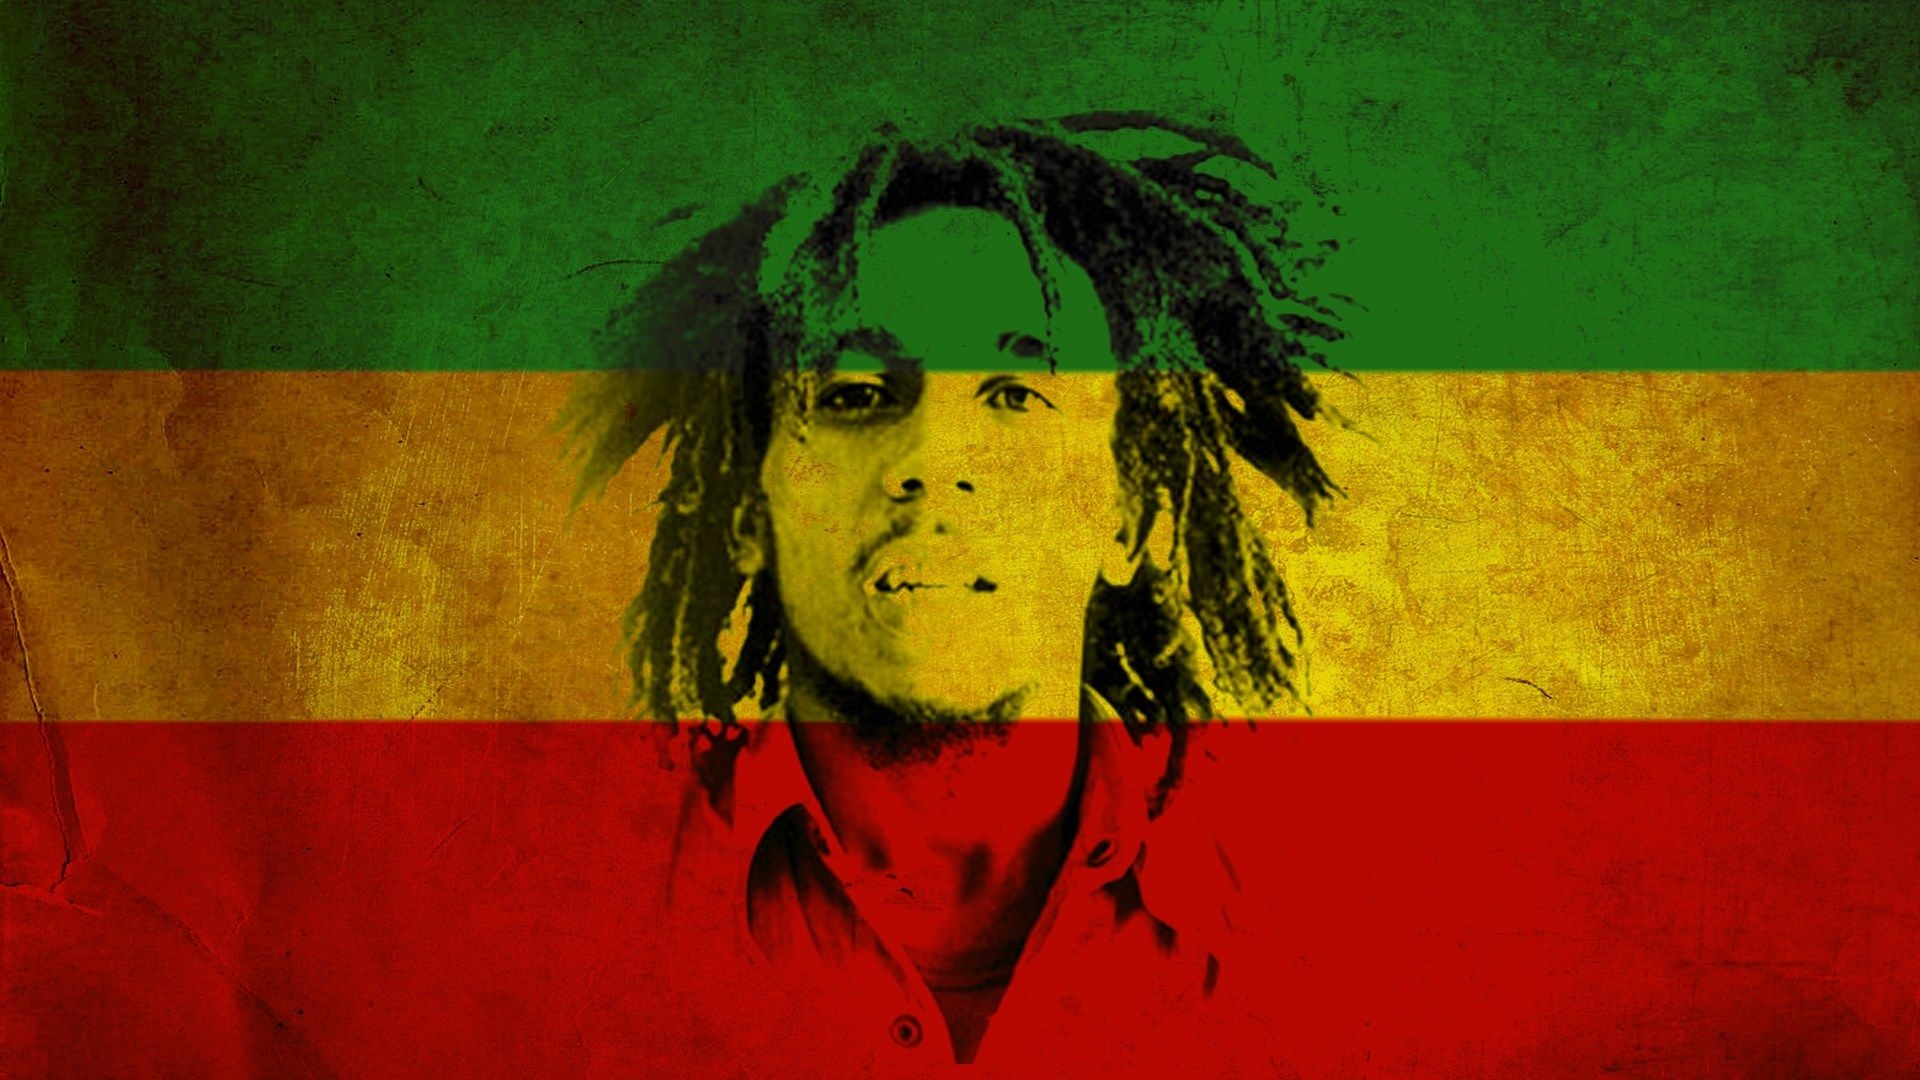 Bob Marley: A totemic symbol for peace, unity and reggae. 1920x1080 Full HD Wallpaper.